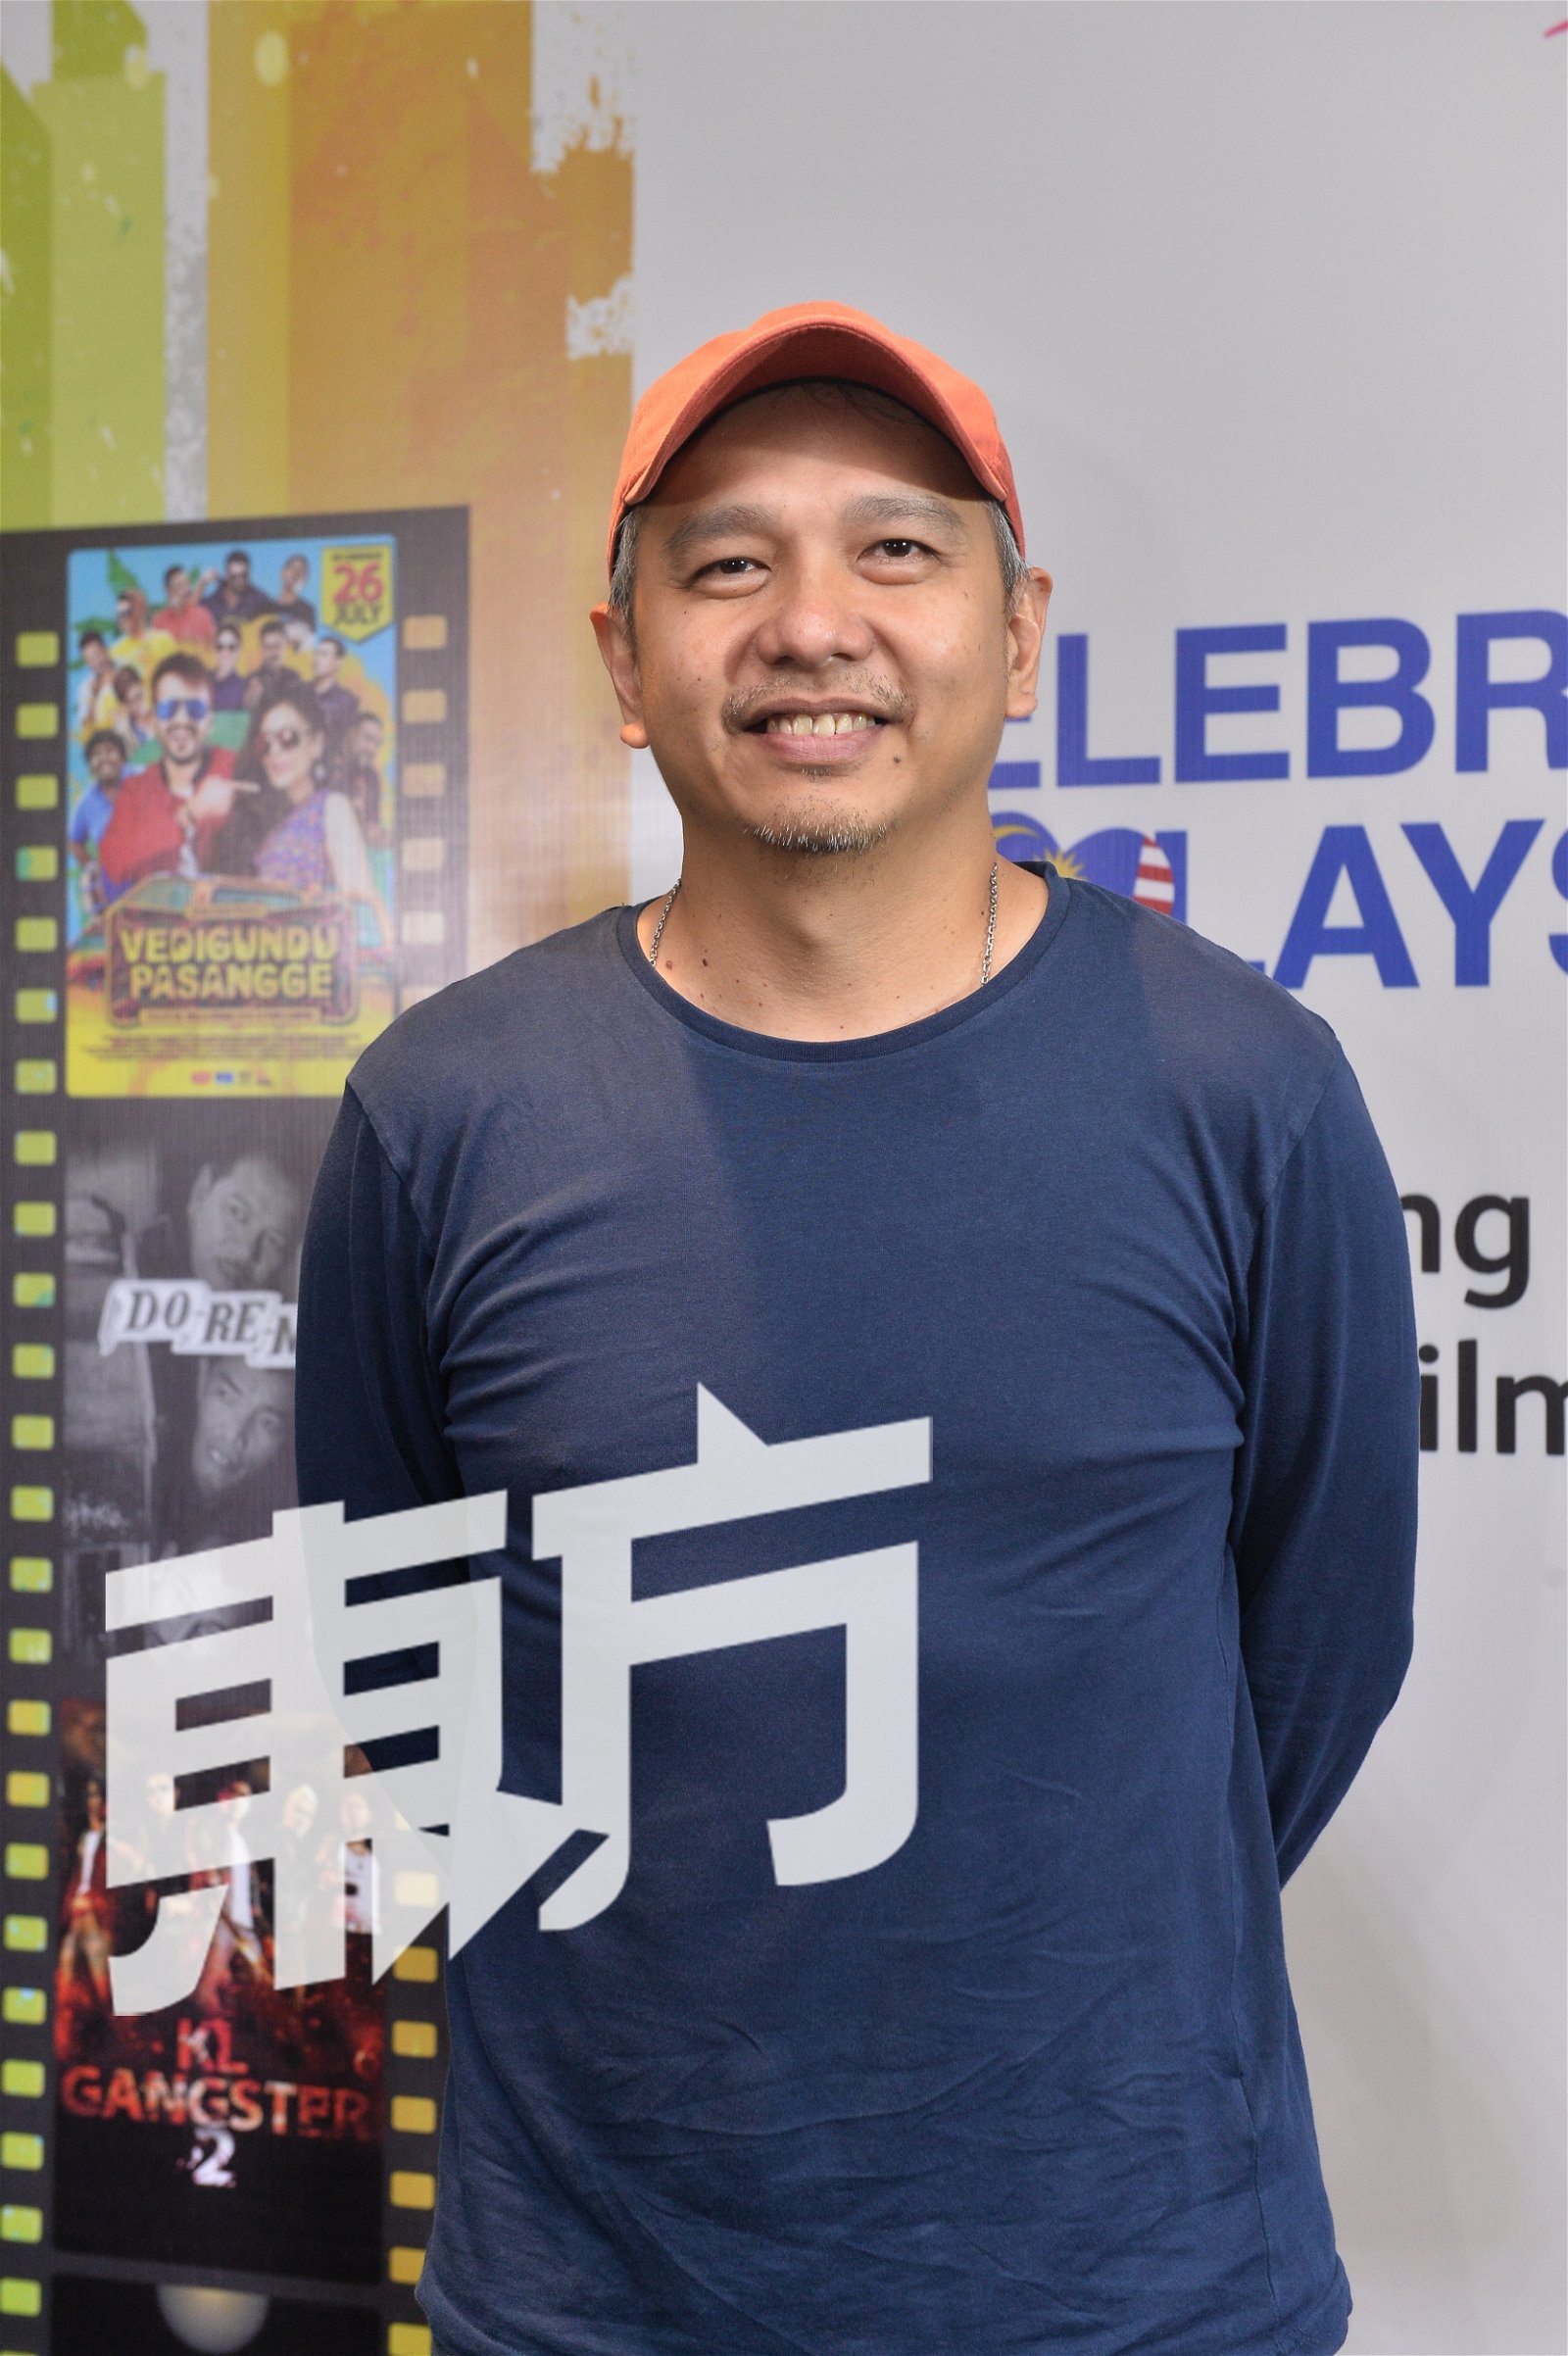 Chiu导目前正积极筹备中国电影的拍摄，该片会是讲述马拉松与父子的题材，演员也为此做了不少训练，他亦为此特地去跑马拉松帮助“入戏”。